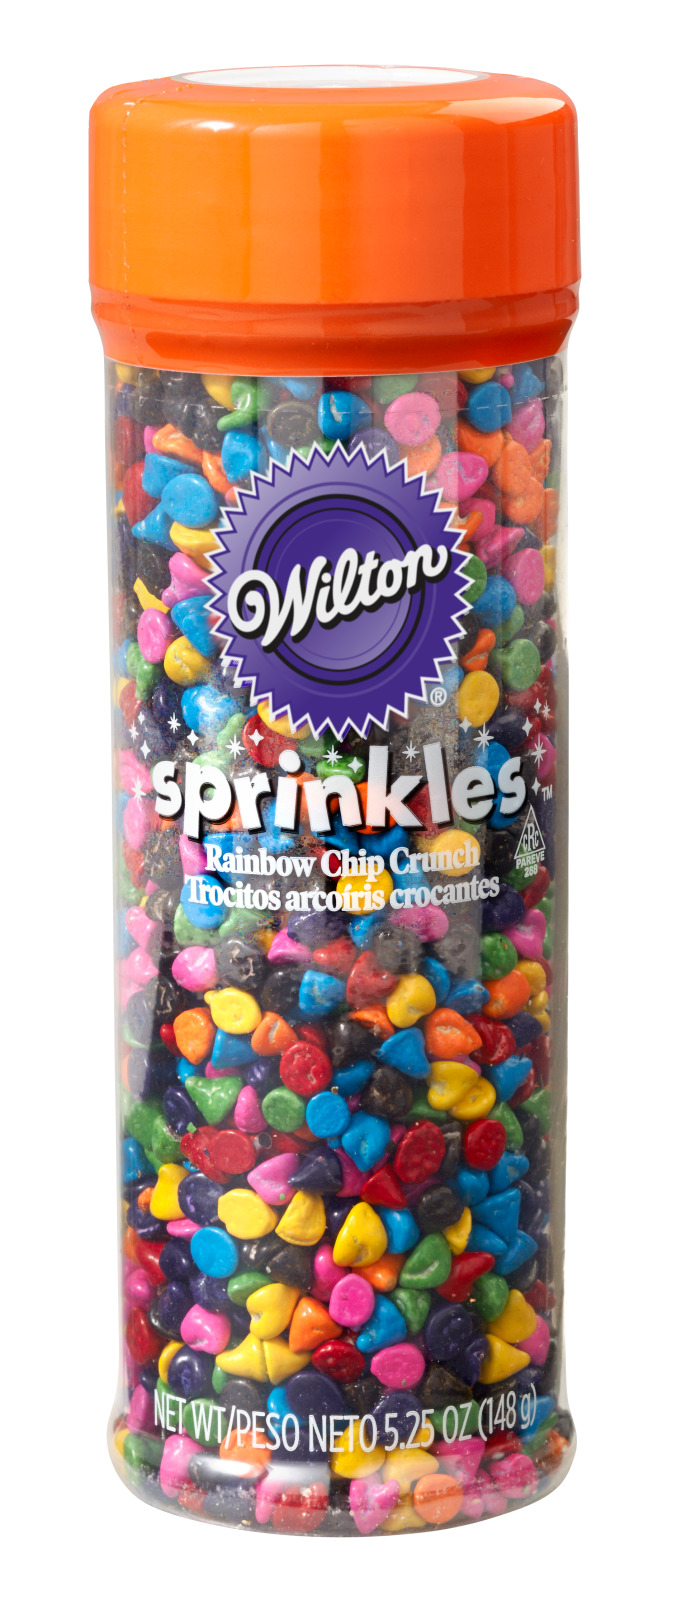 Rainbow Chip Crunch Sprinkles, Item # 710-9704